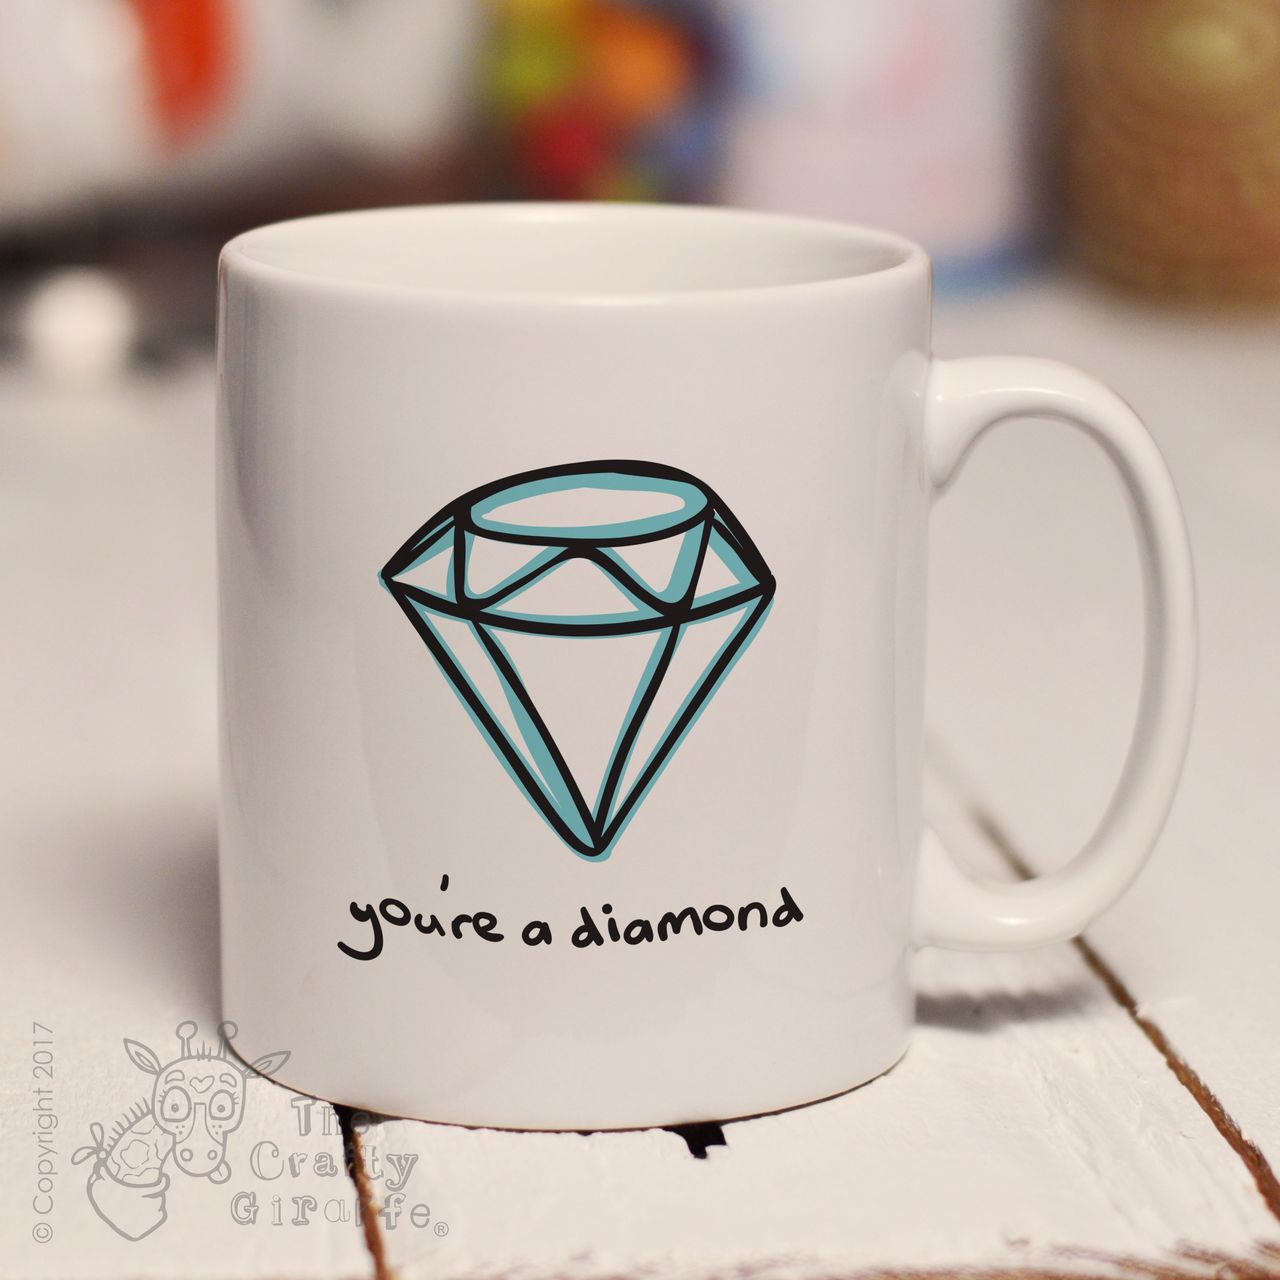 You’re a diamond mug